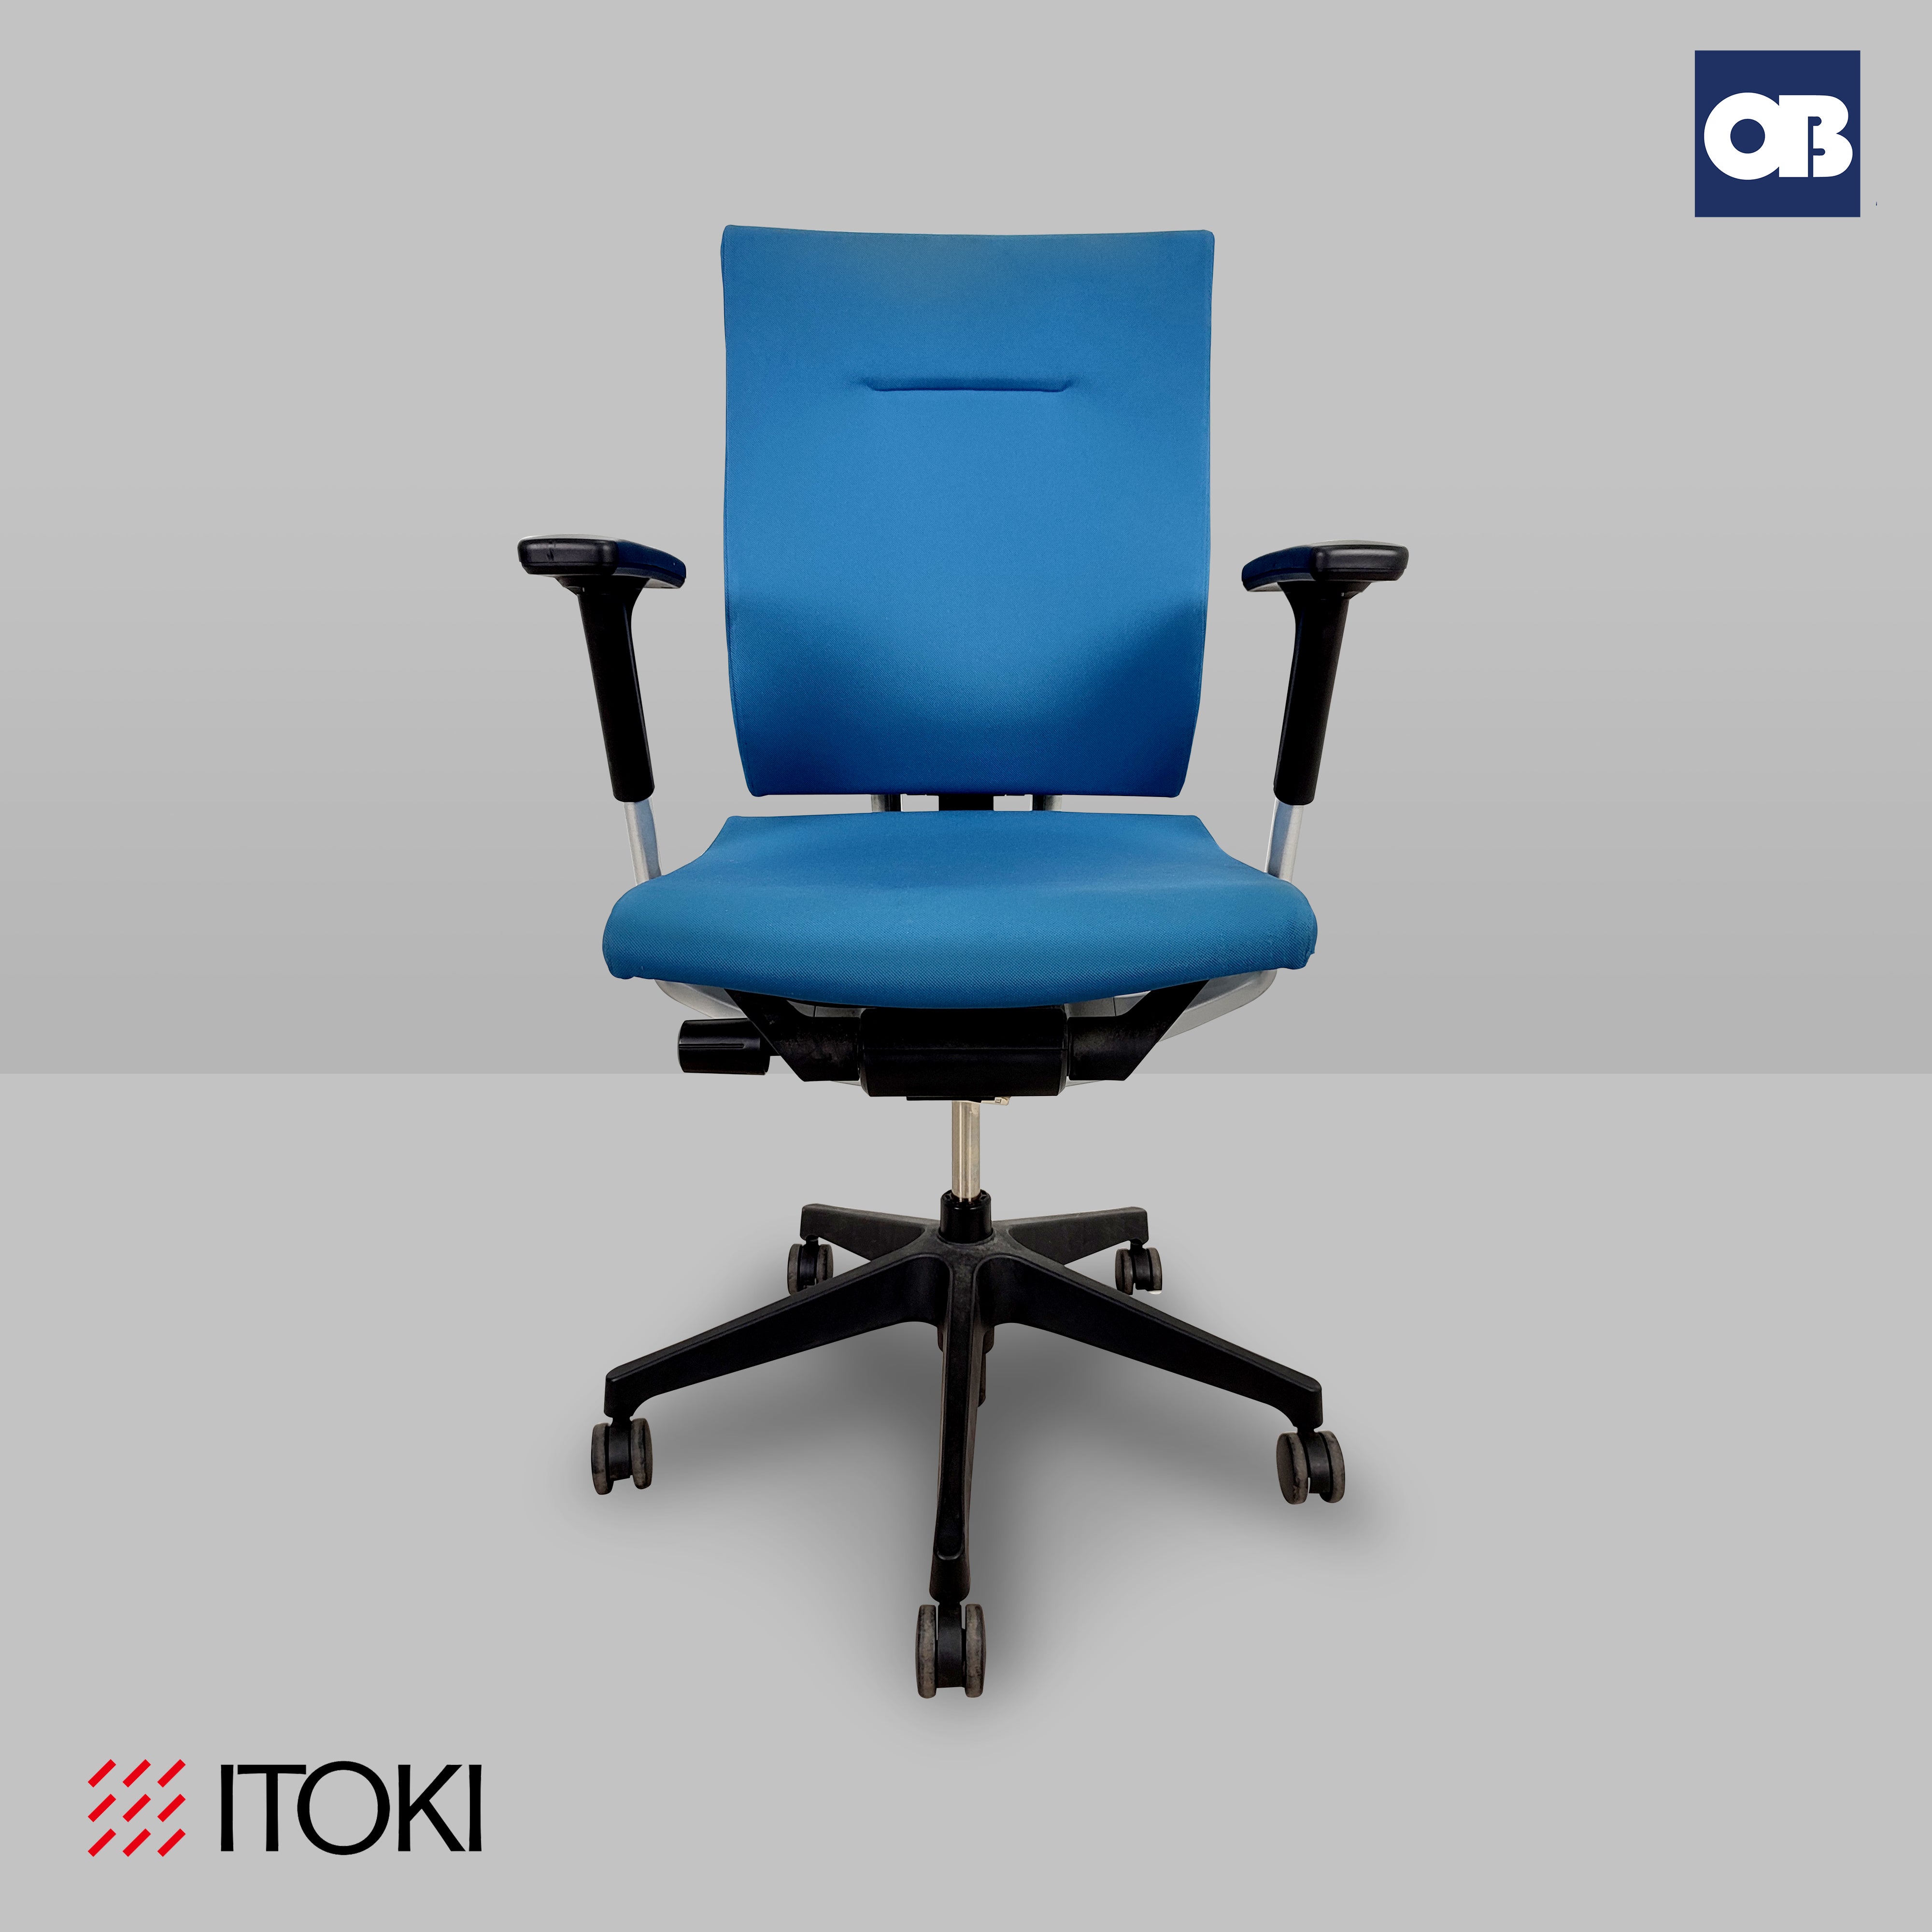 Itoki High Back Swivel Chair